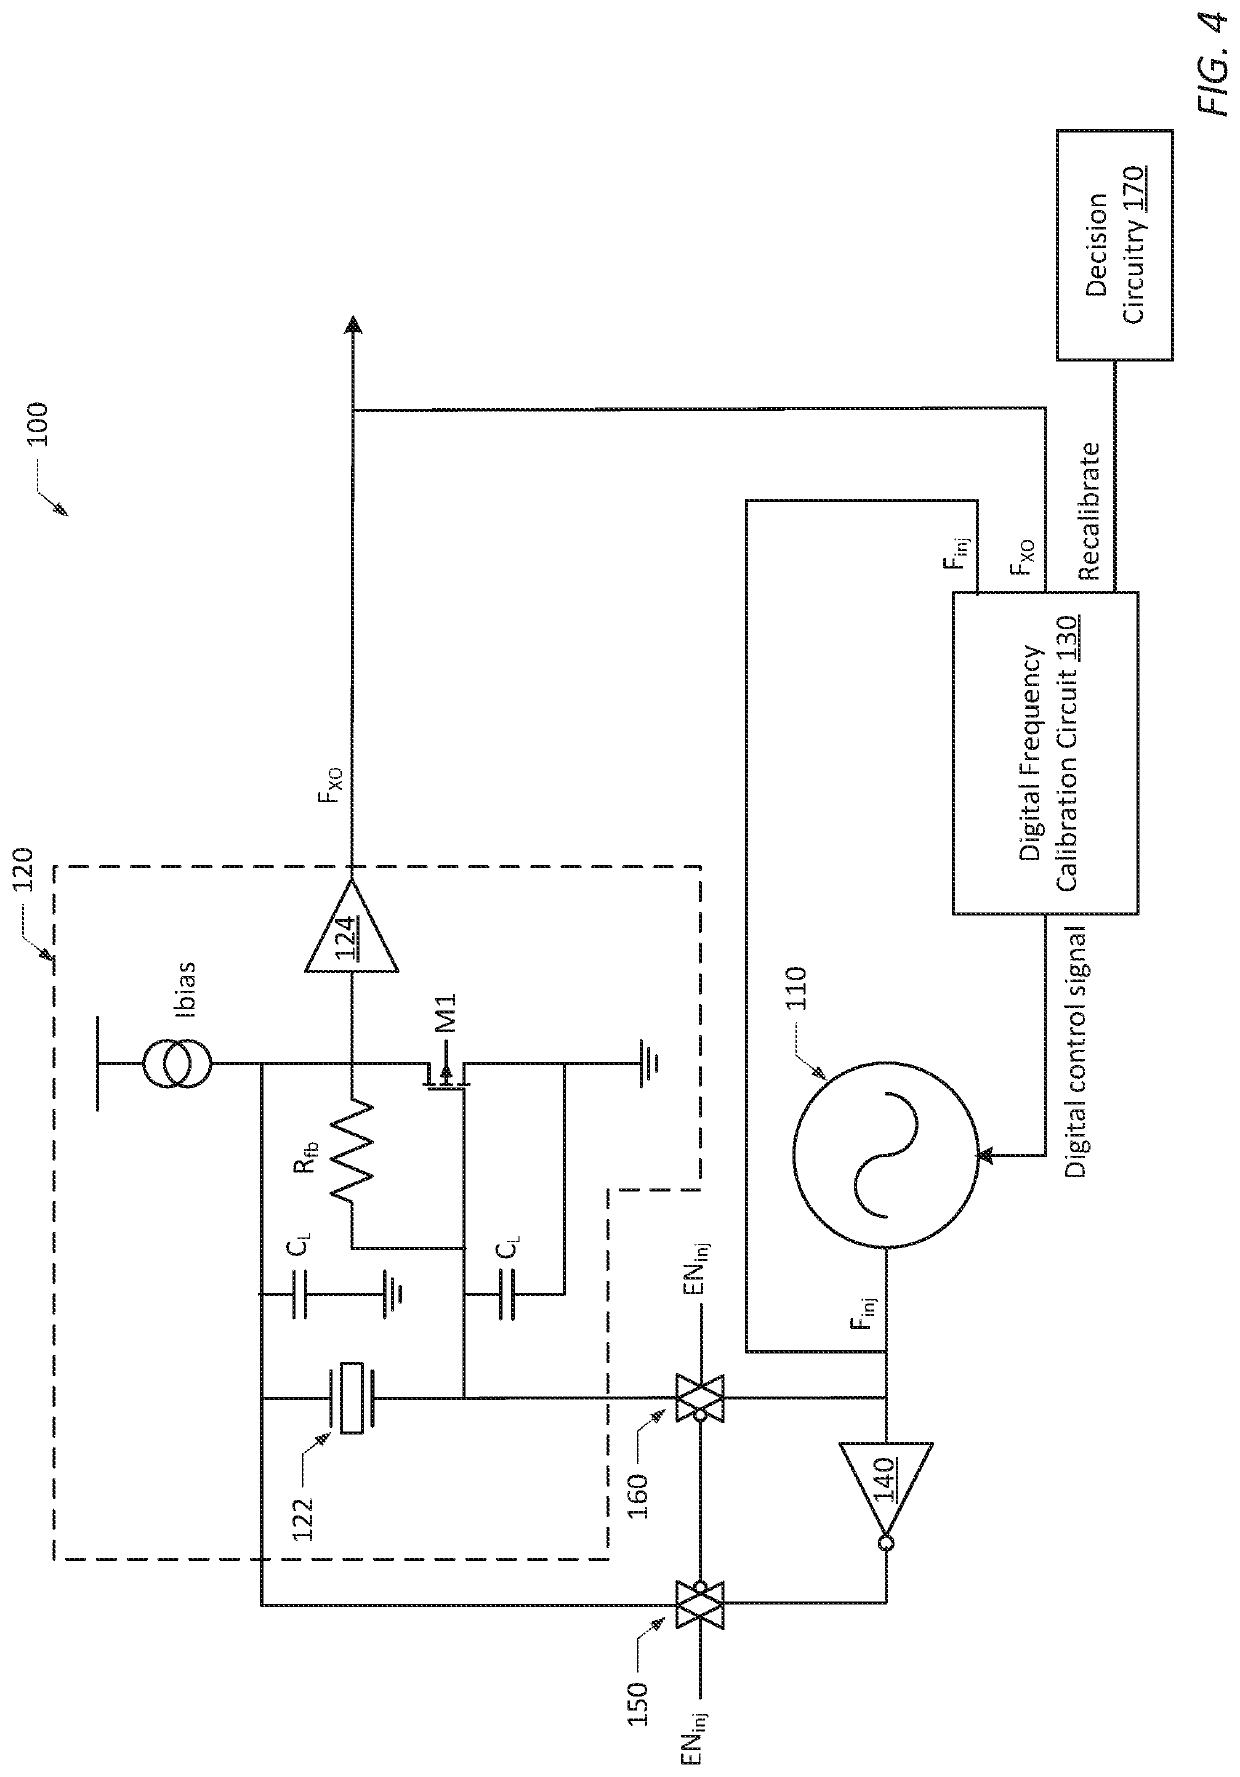 Clock Circuit And Method For Recalibrating An Injection Oscillator Coupled To Kick-Start A Crystal Oscillator